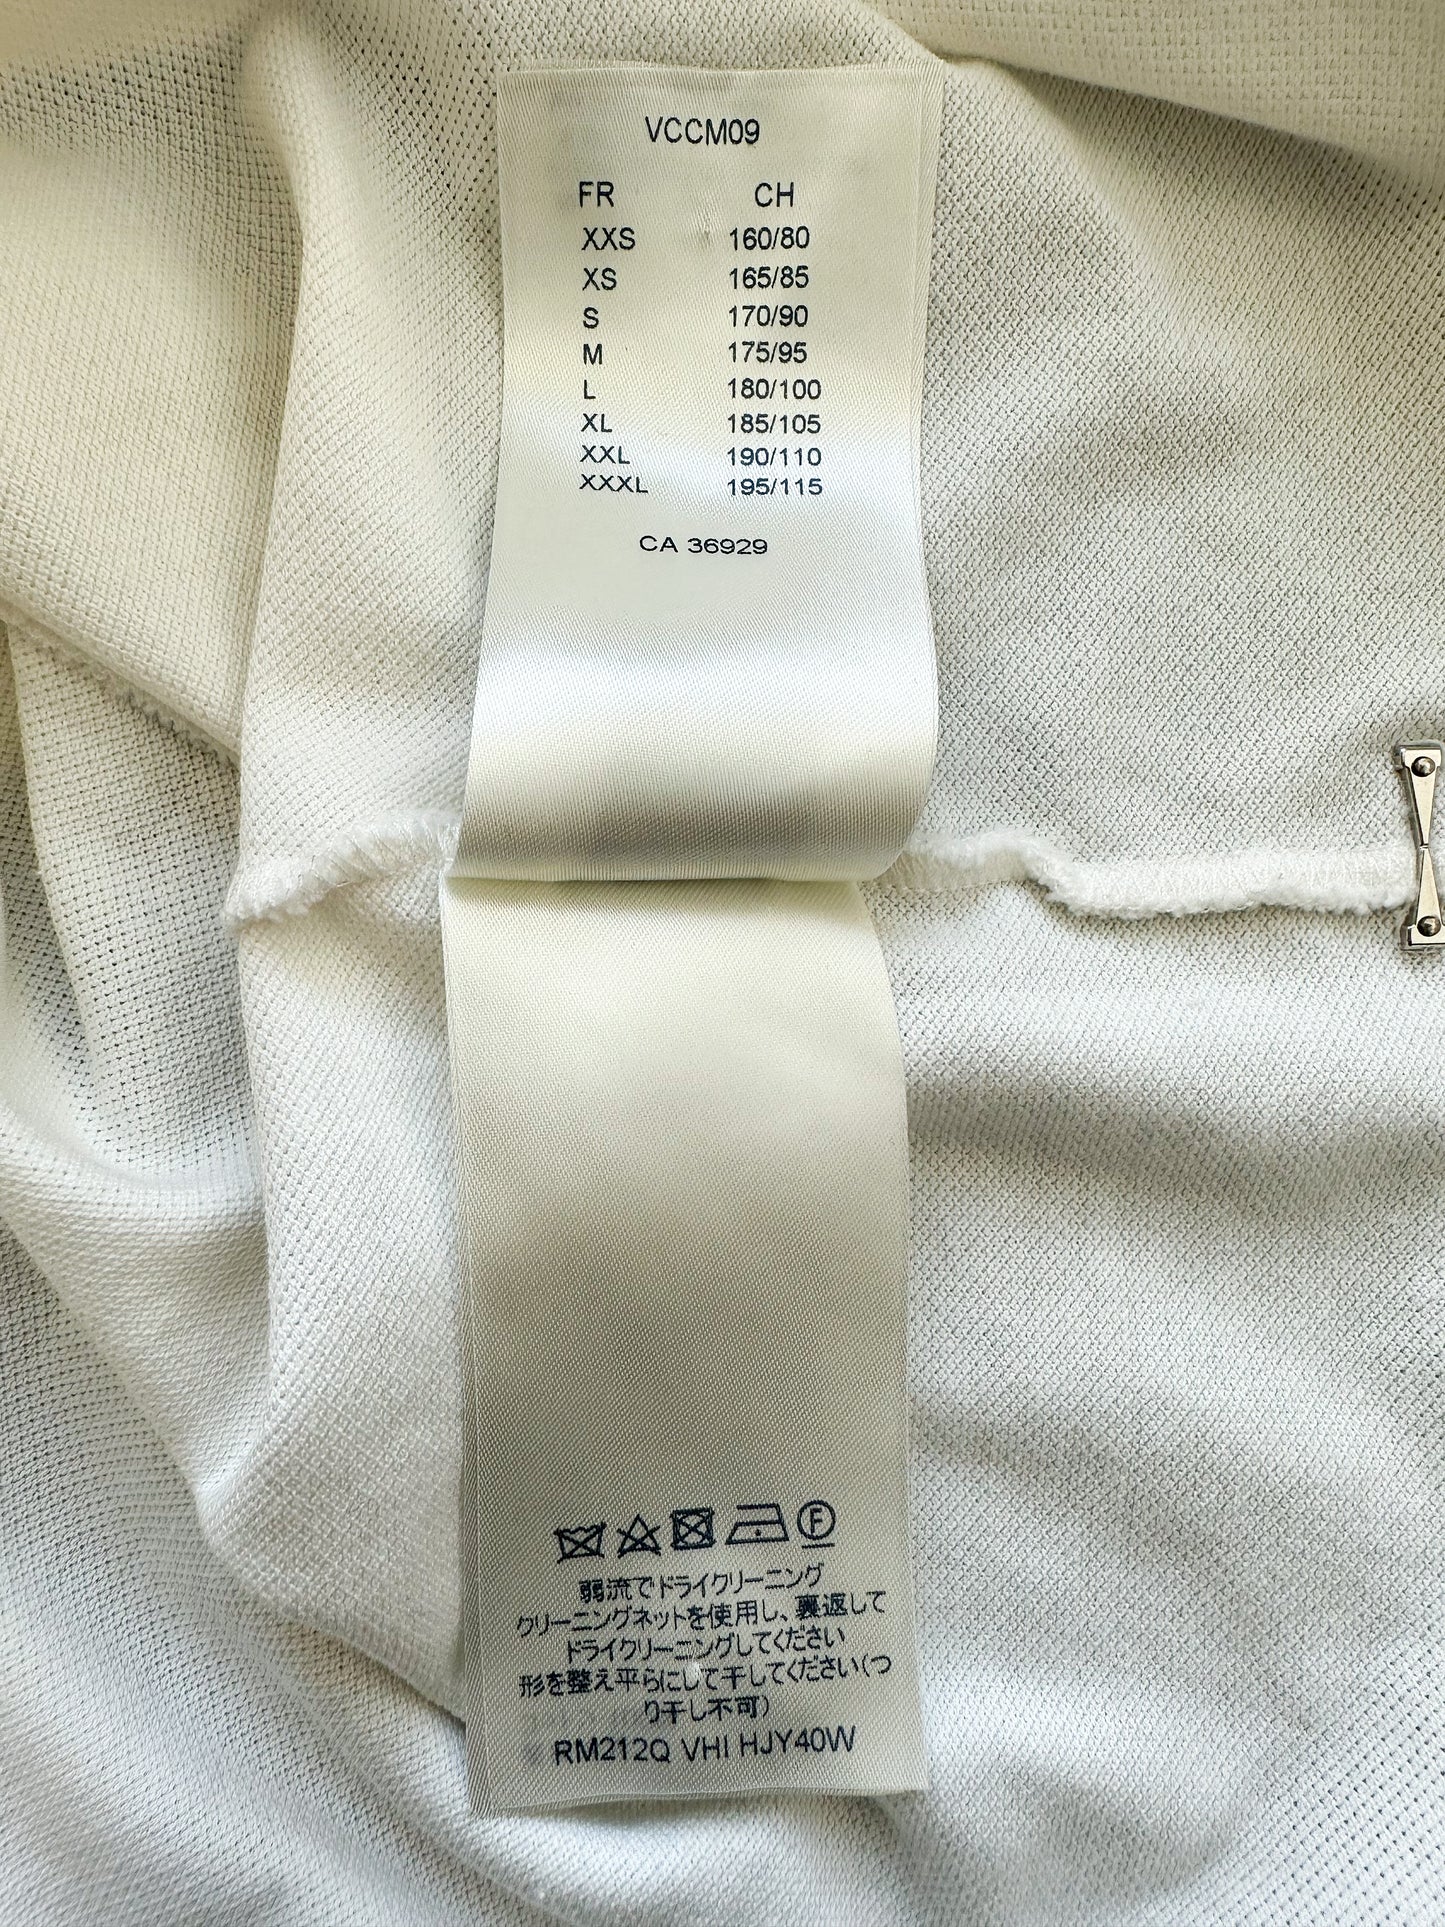 Louis Vuitton #23 Half Damier Pocket T-shirt White Size: SizeL